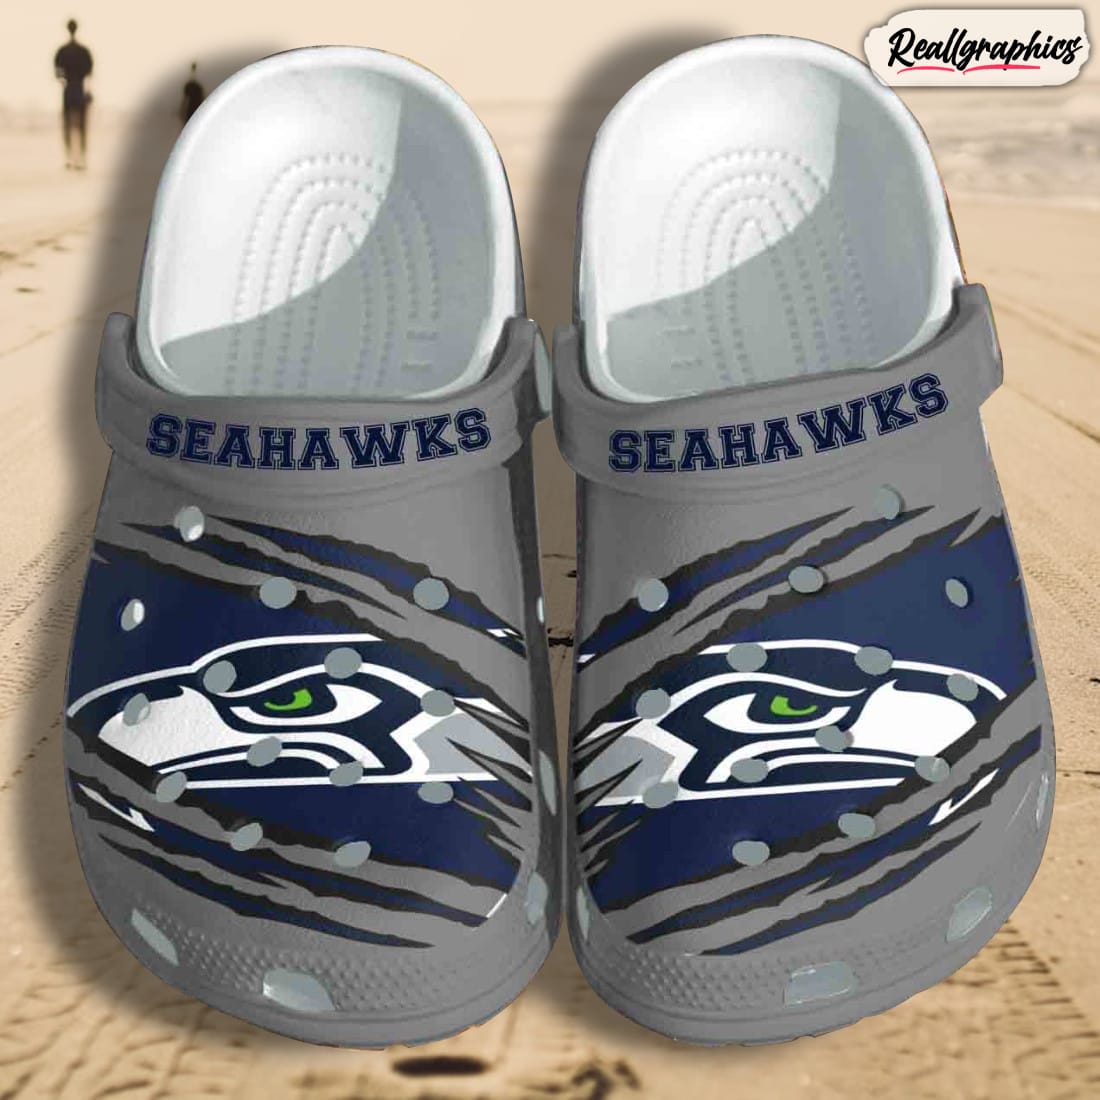 seahawks custom shoes, customize outdoor shoes boy friend